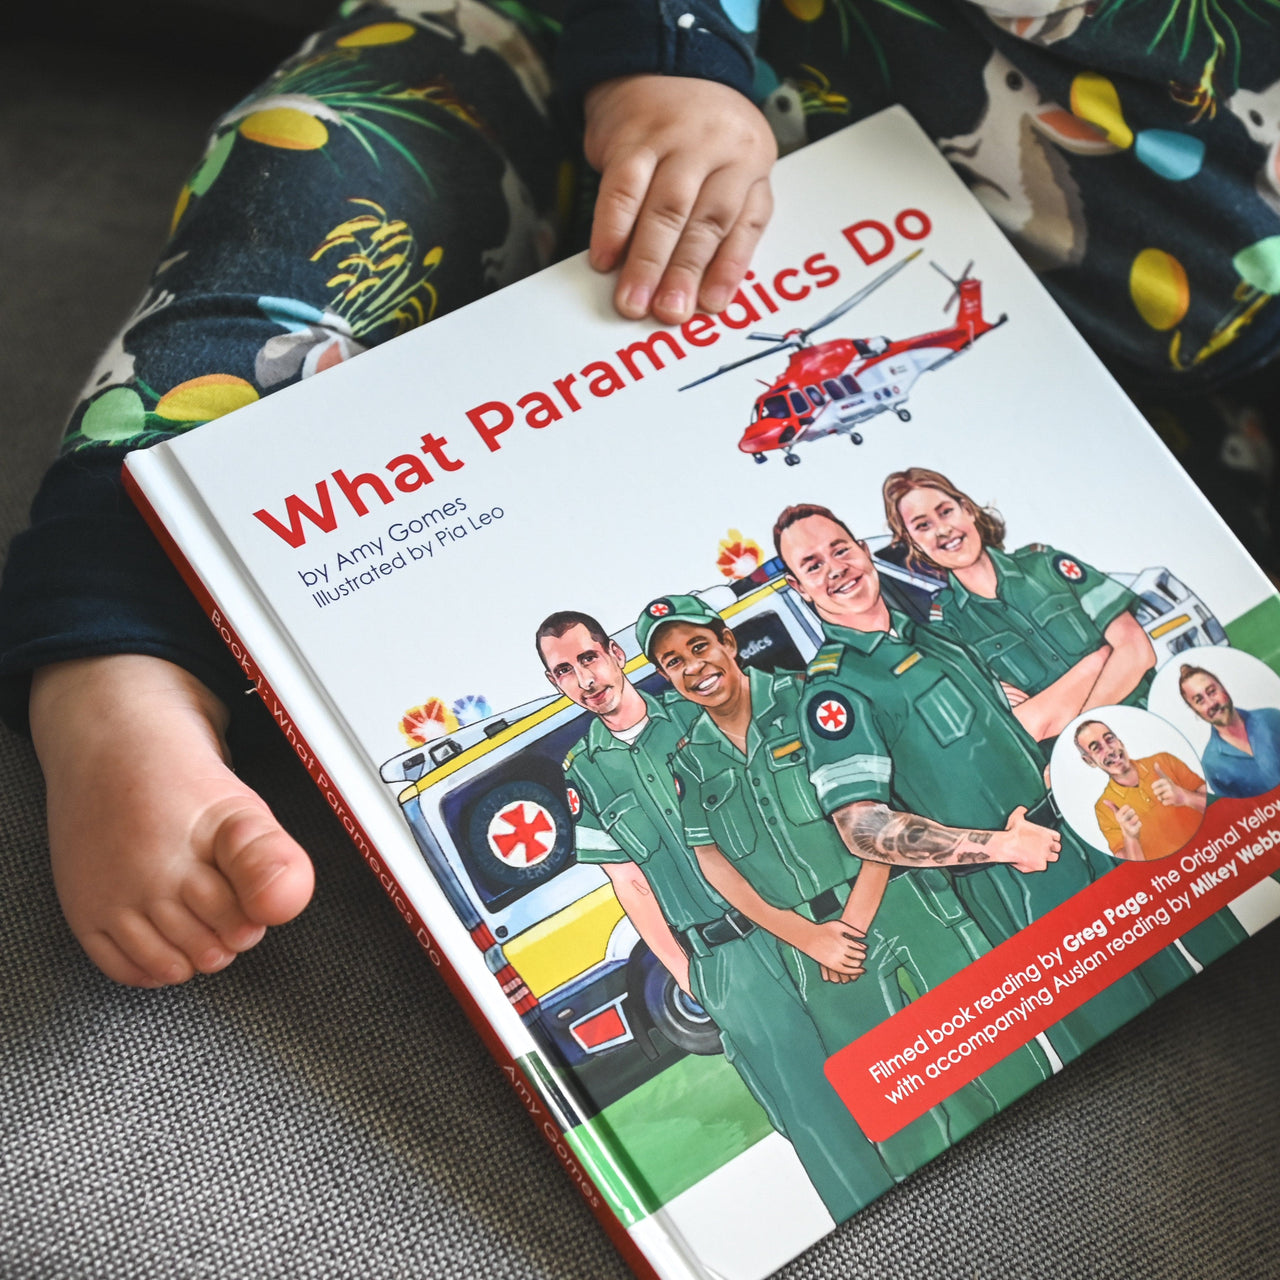 Paramedic Shop Tammie Bullard Textbooks What Paramedic's Do Children's Book - Amy Gomes